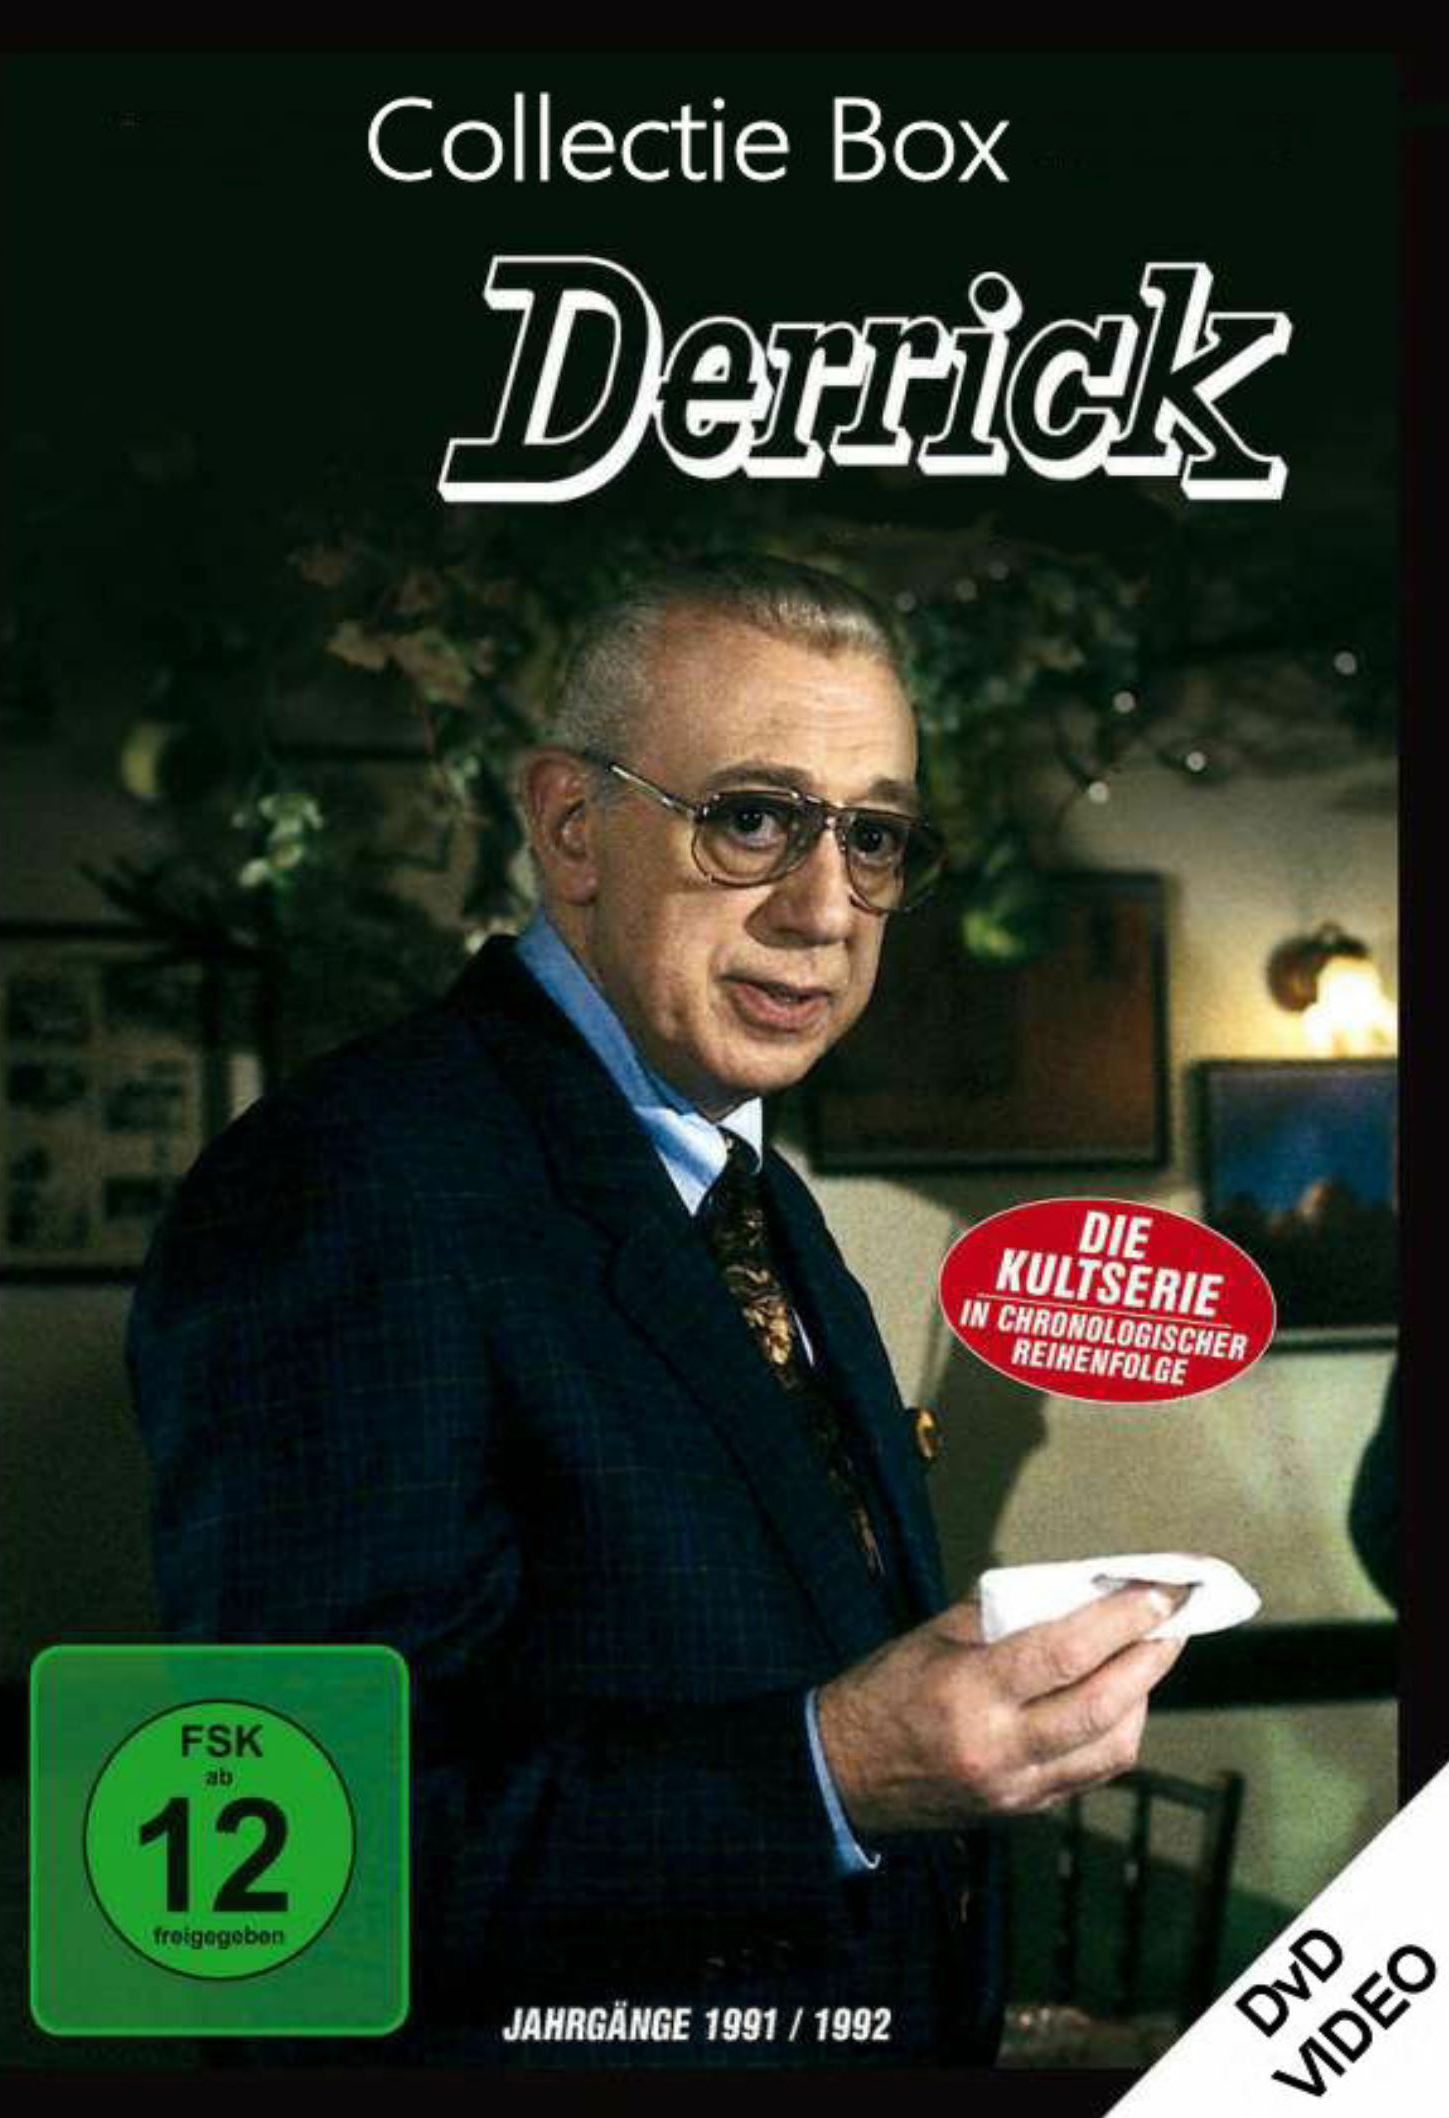 Derrick Collectie - DvD 16 NL subs